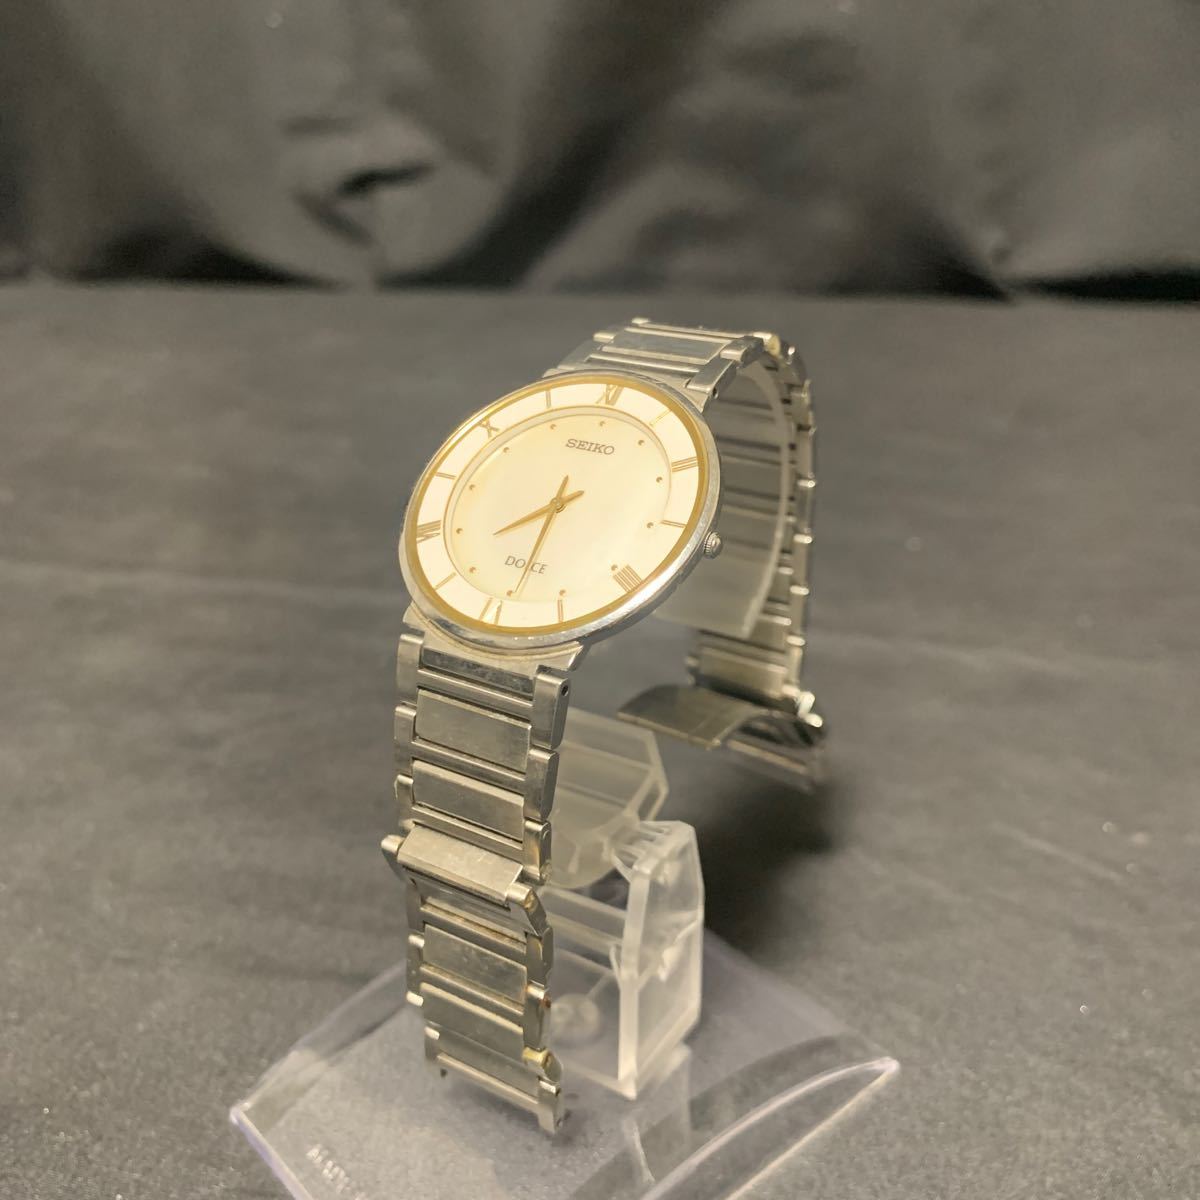 SEIKO DOLCE セイコー ドルチェ 4J40-0AD0 腕時計 シルバー シェル文字盤 クォーツ 2針 _画像1